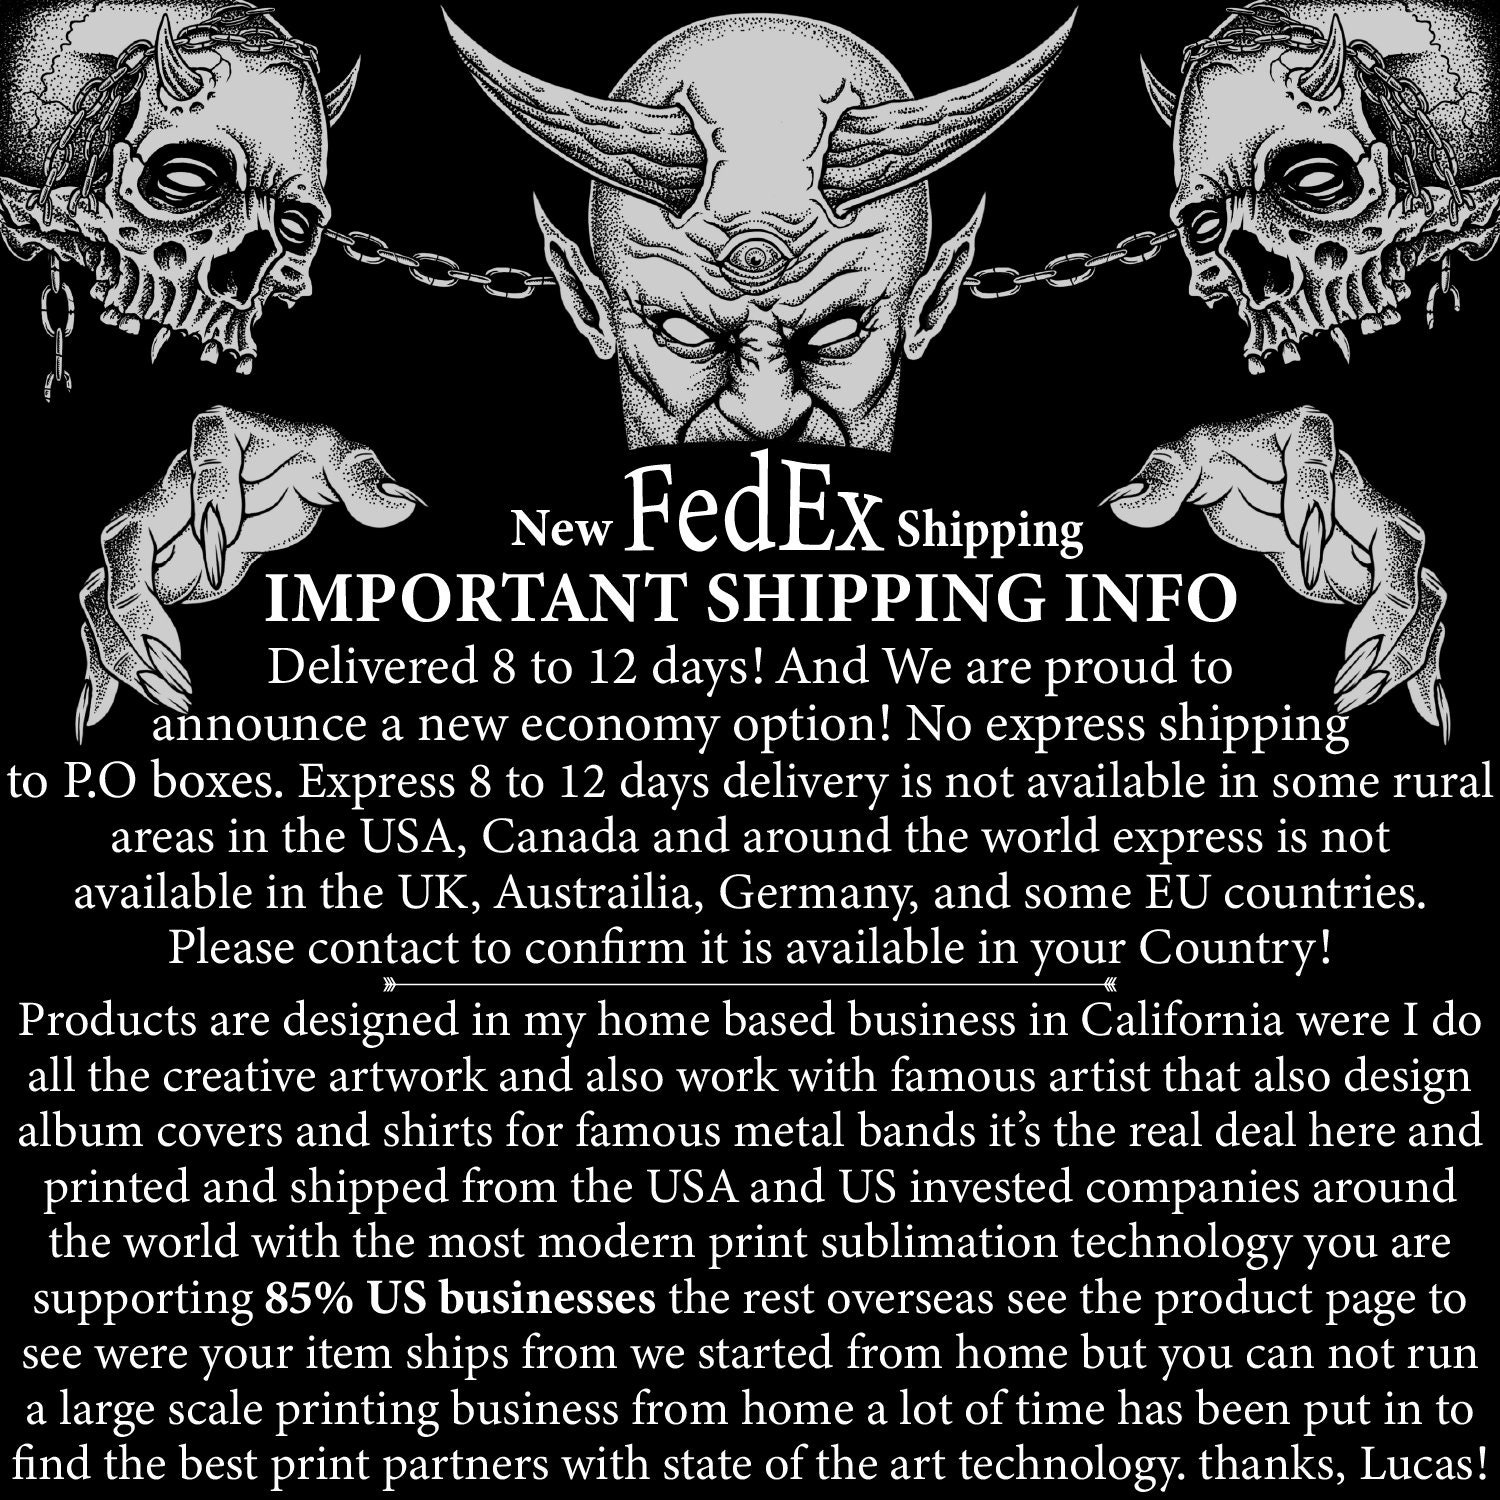 Discover Satanic Skull Goat 3 Piece Duvet Set Black And White Version With Pentagram Goat Pillow Cases-Satanic Goat Home Decor-Satanic Room Decor-